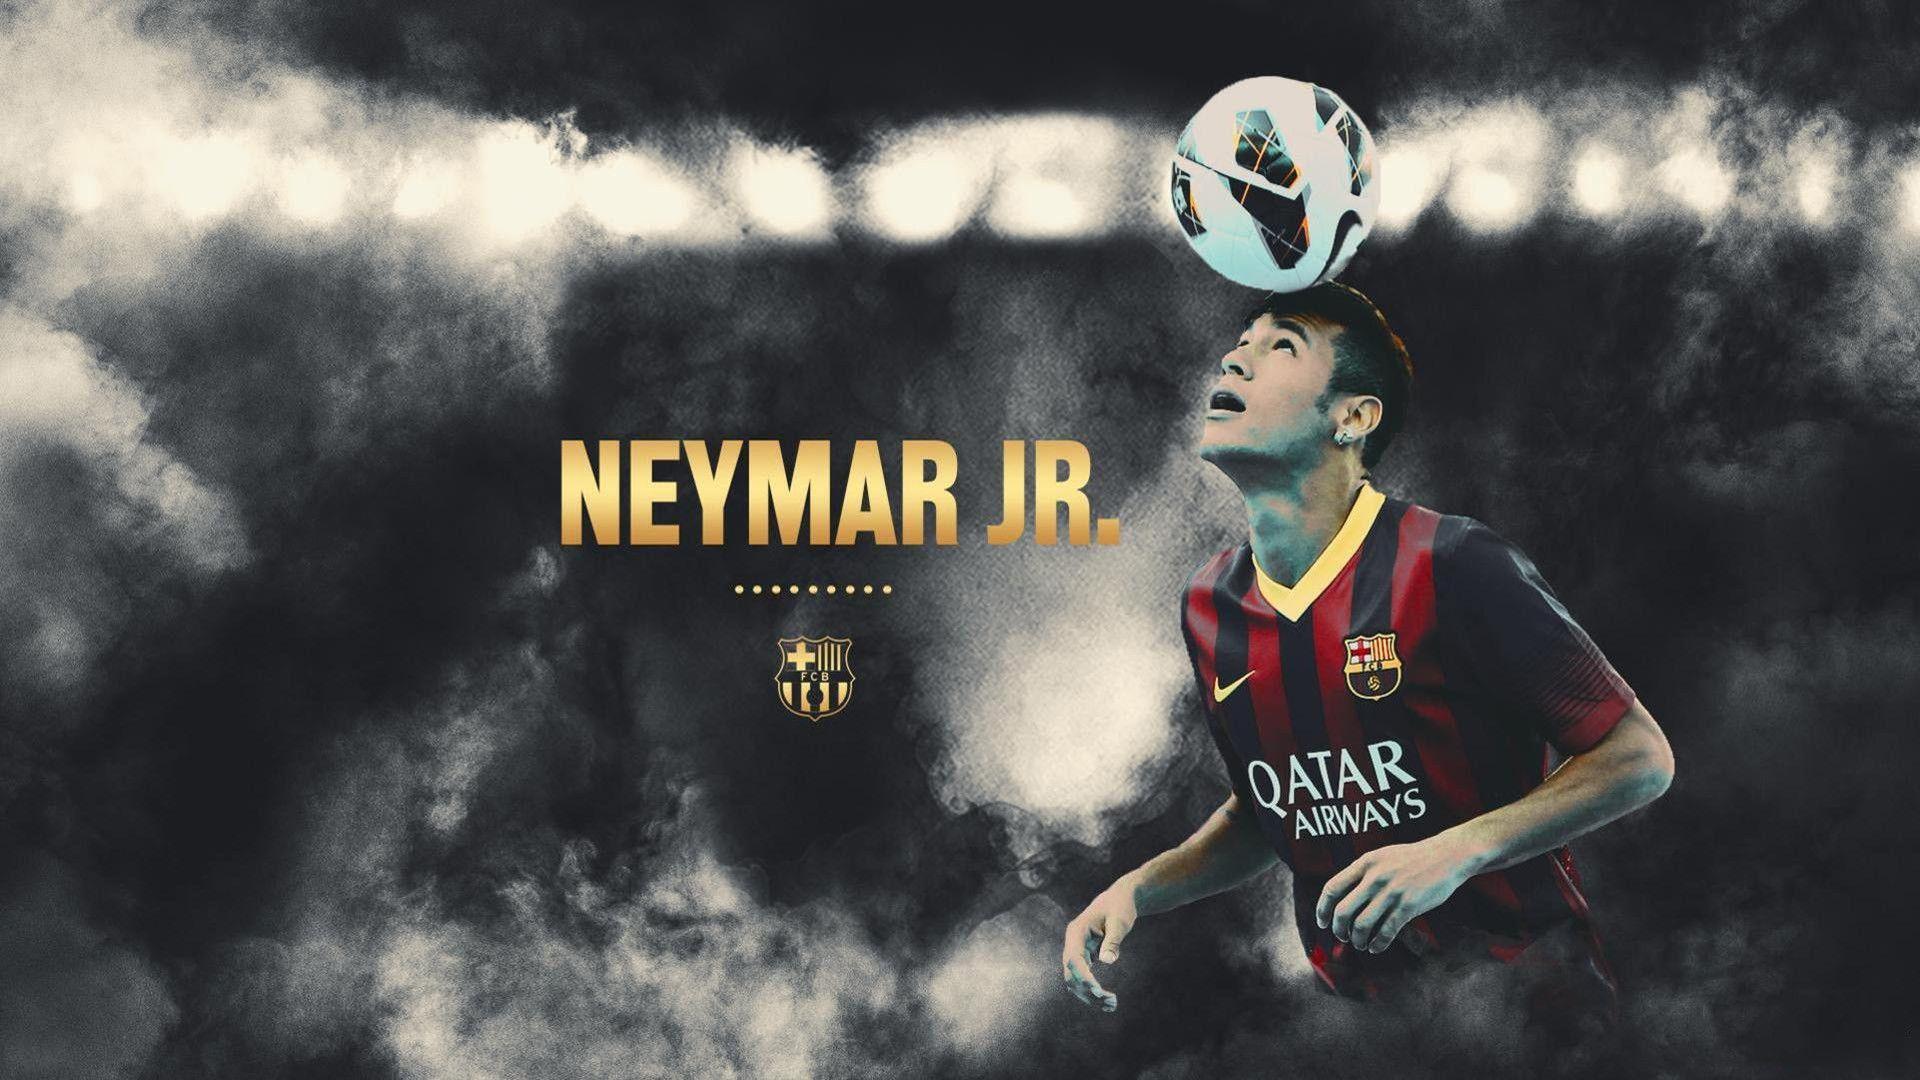 Neymar Jr - Highly Paid Footballer